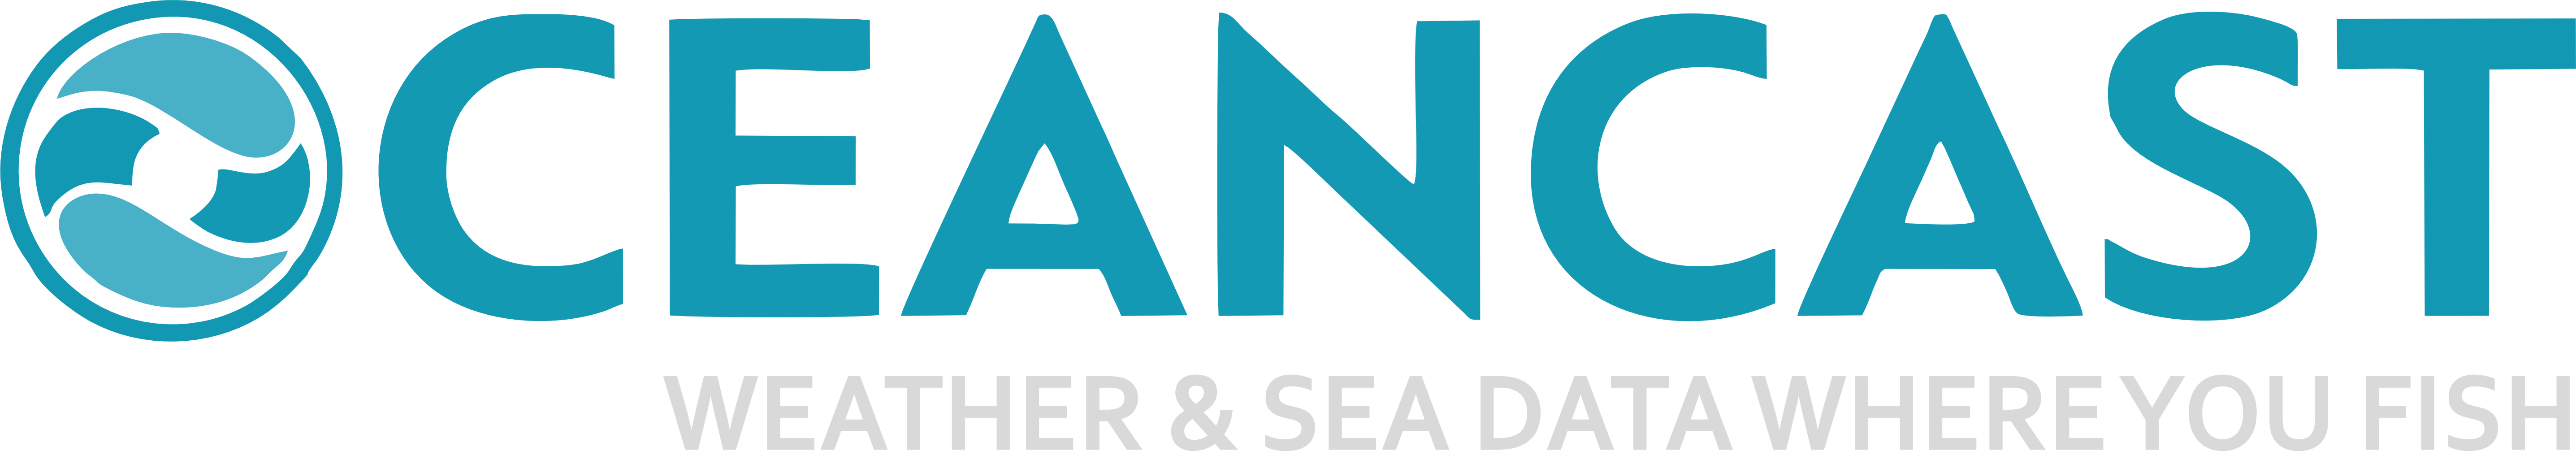 Oceancast logo